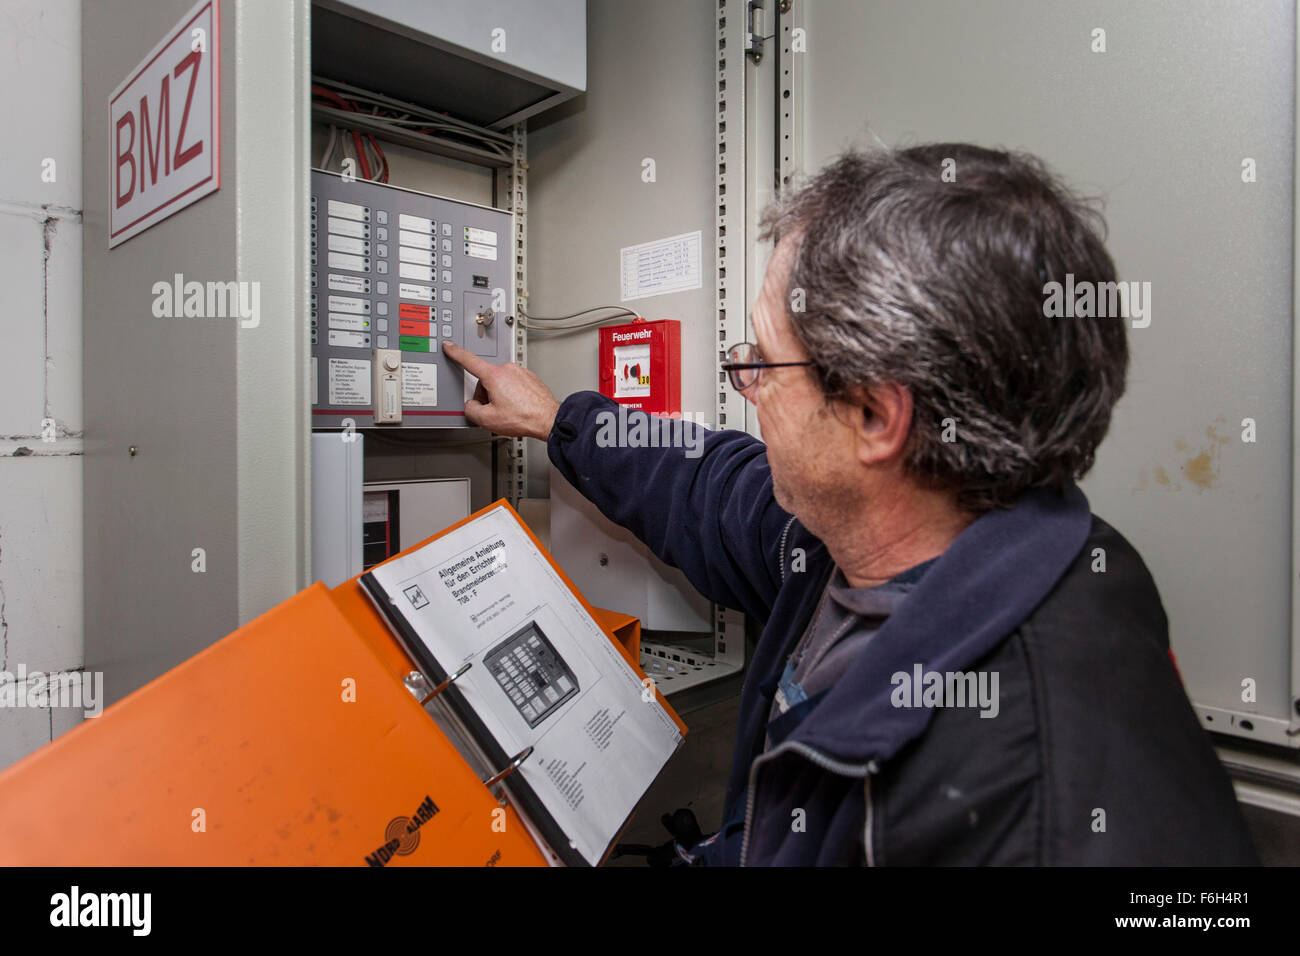 Caretaker checks a central fire alarm system into residential building. Stock Photo